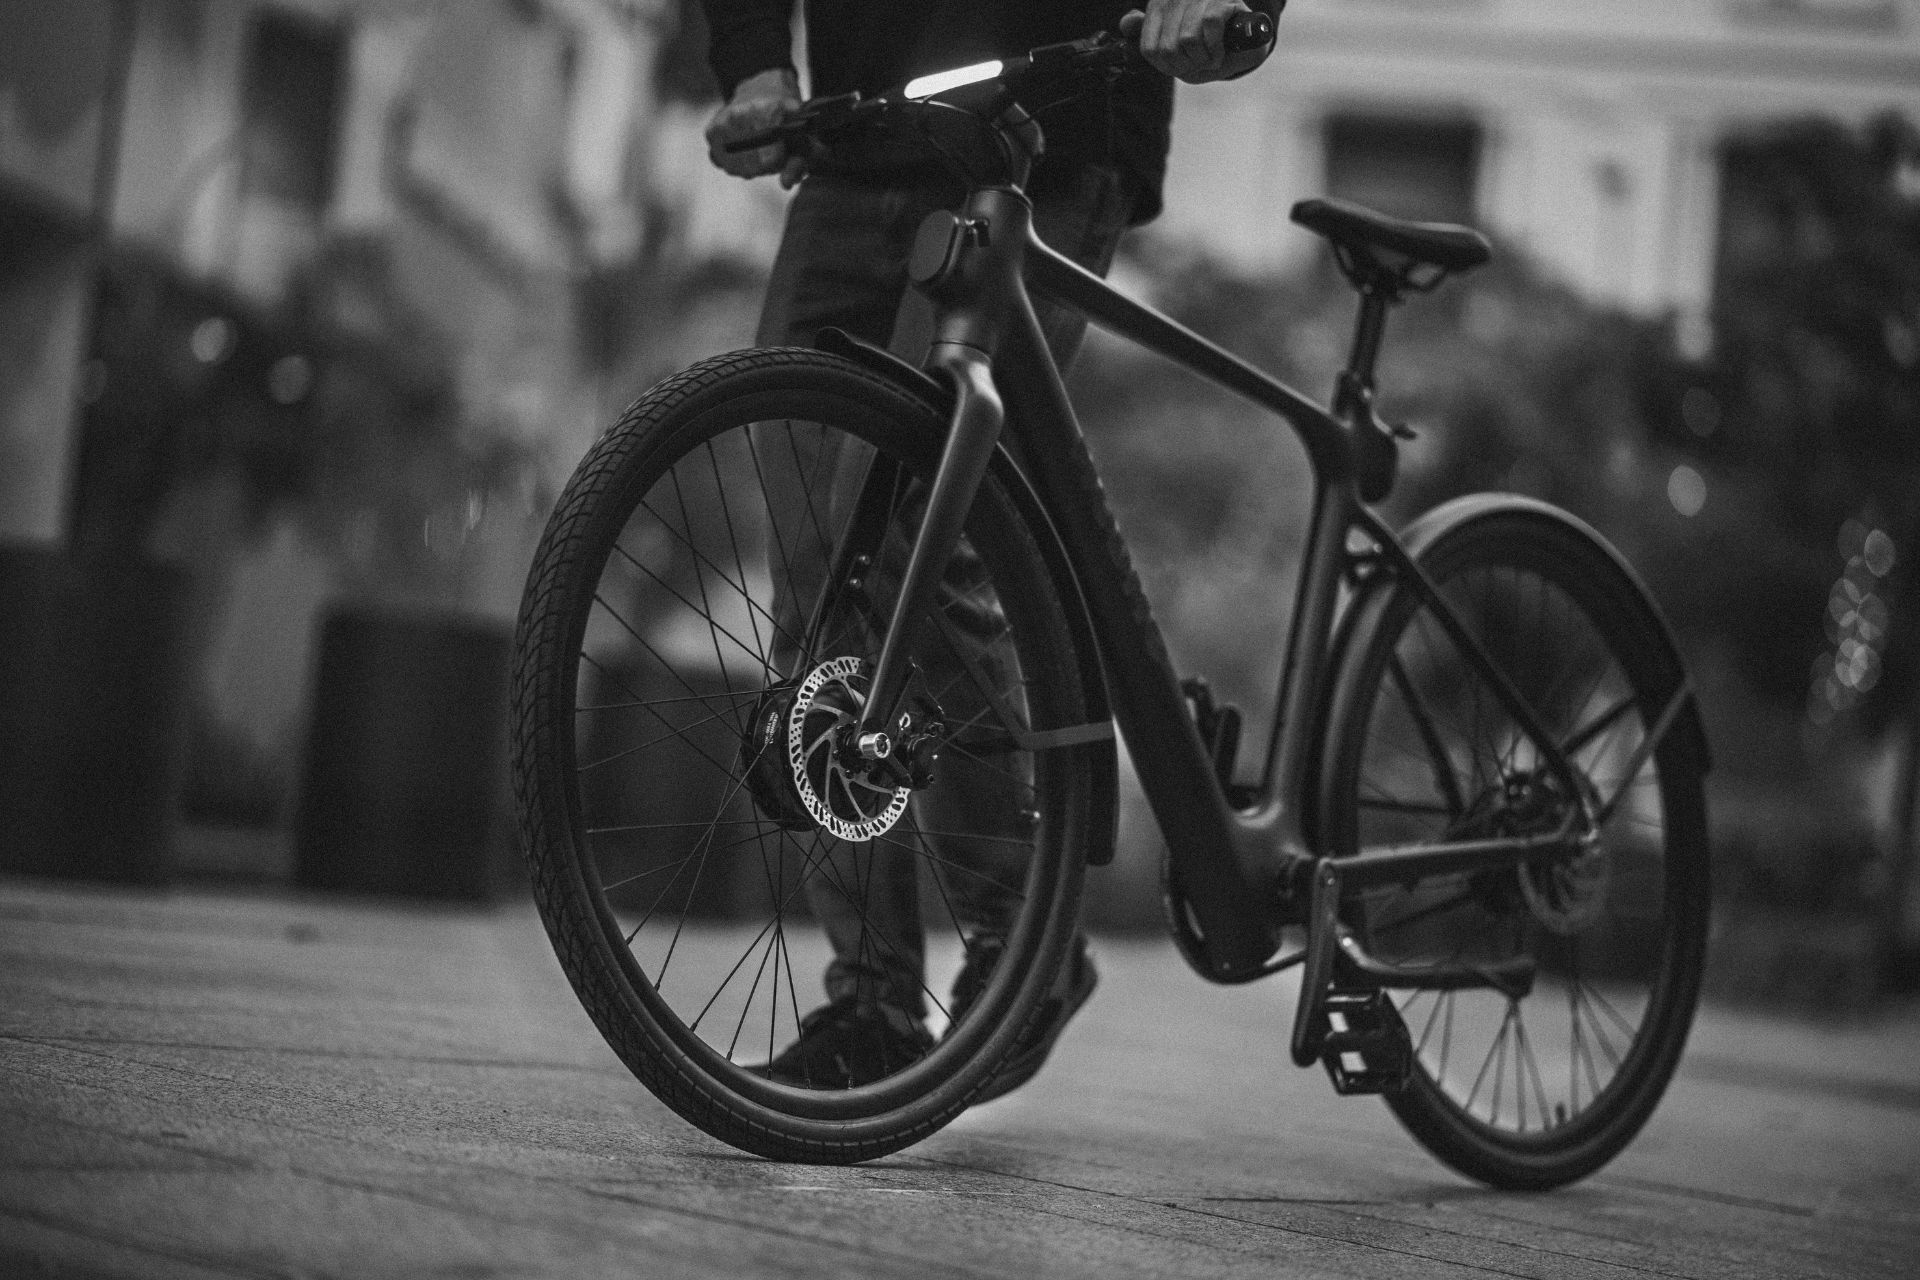 Modmo Saigon+ Electric Bicycle - RRP £2800 - Size S (Rider: 140-155cm) - Image 11 of 19